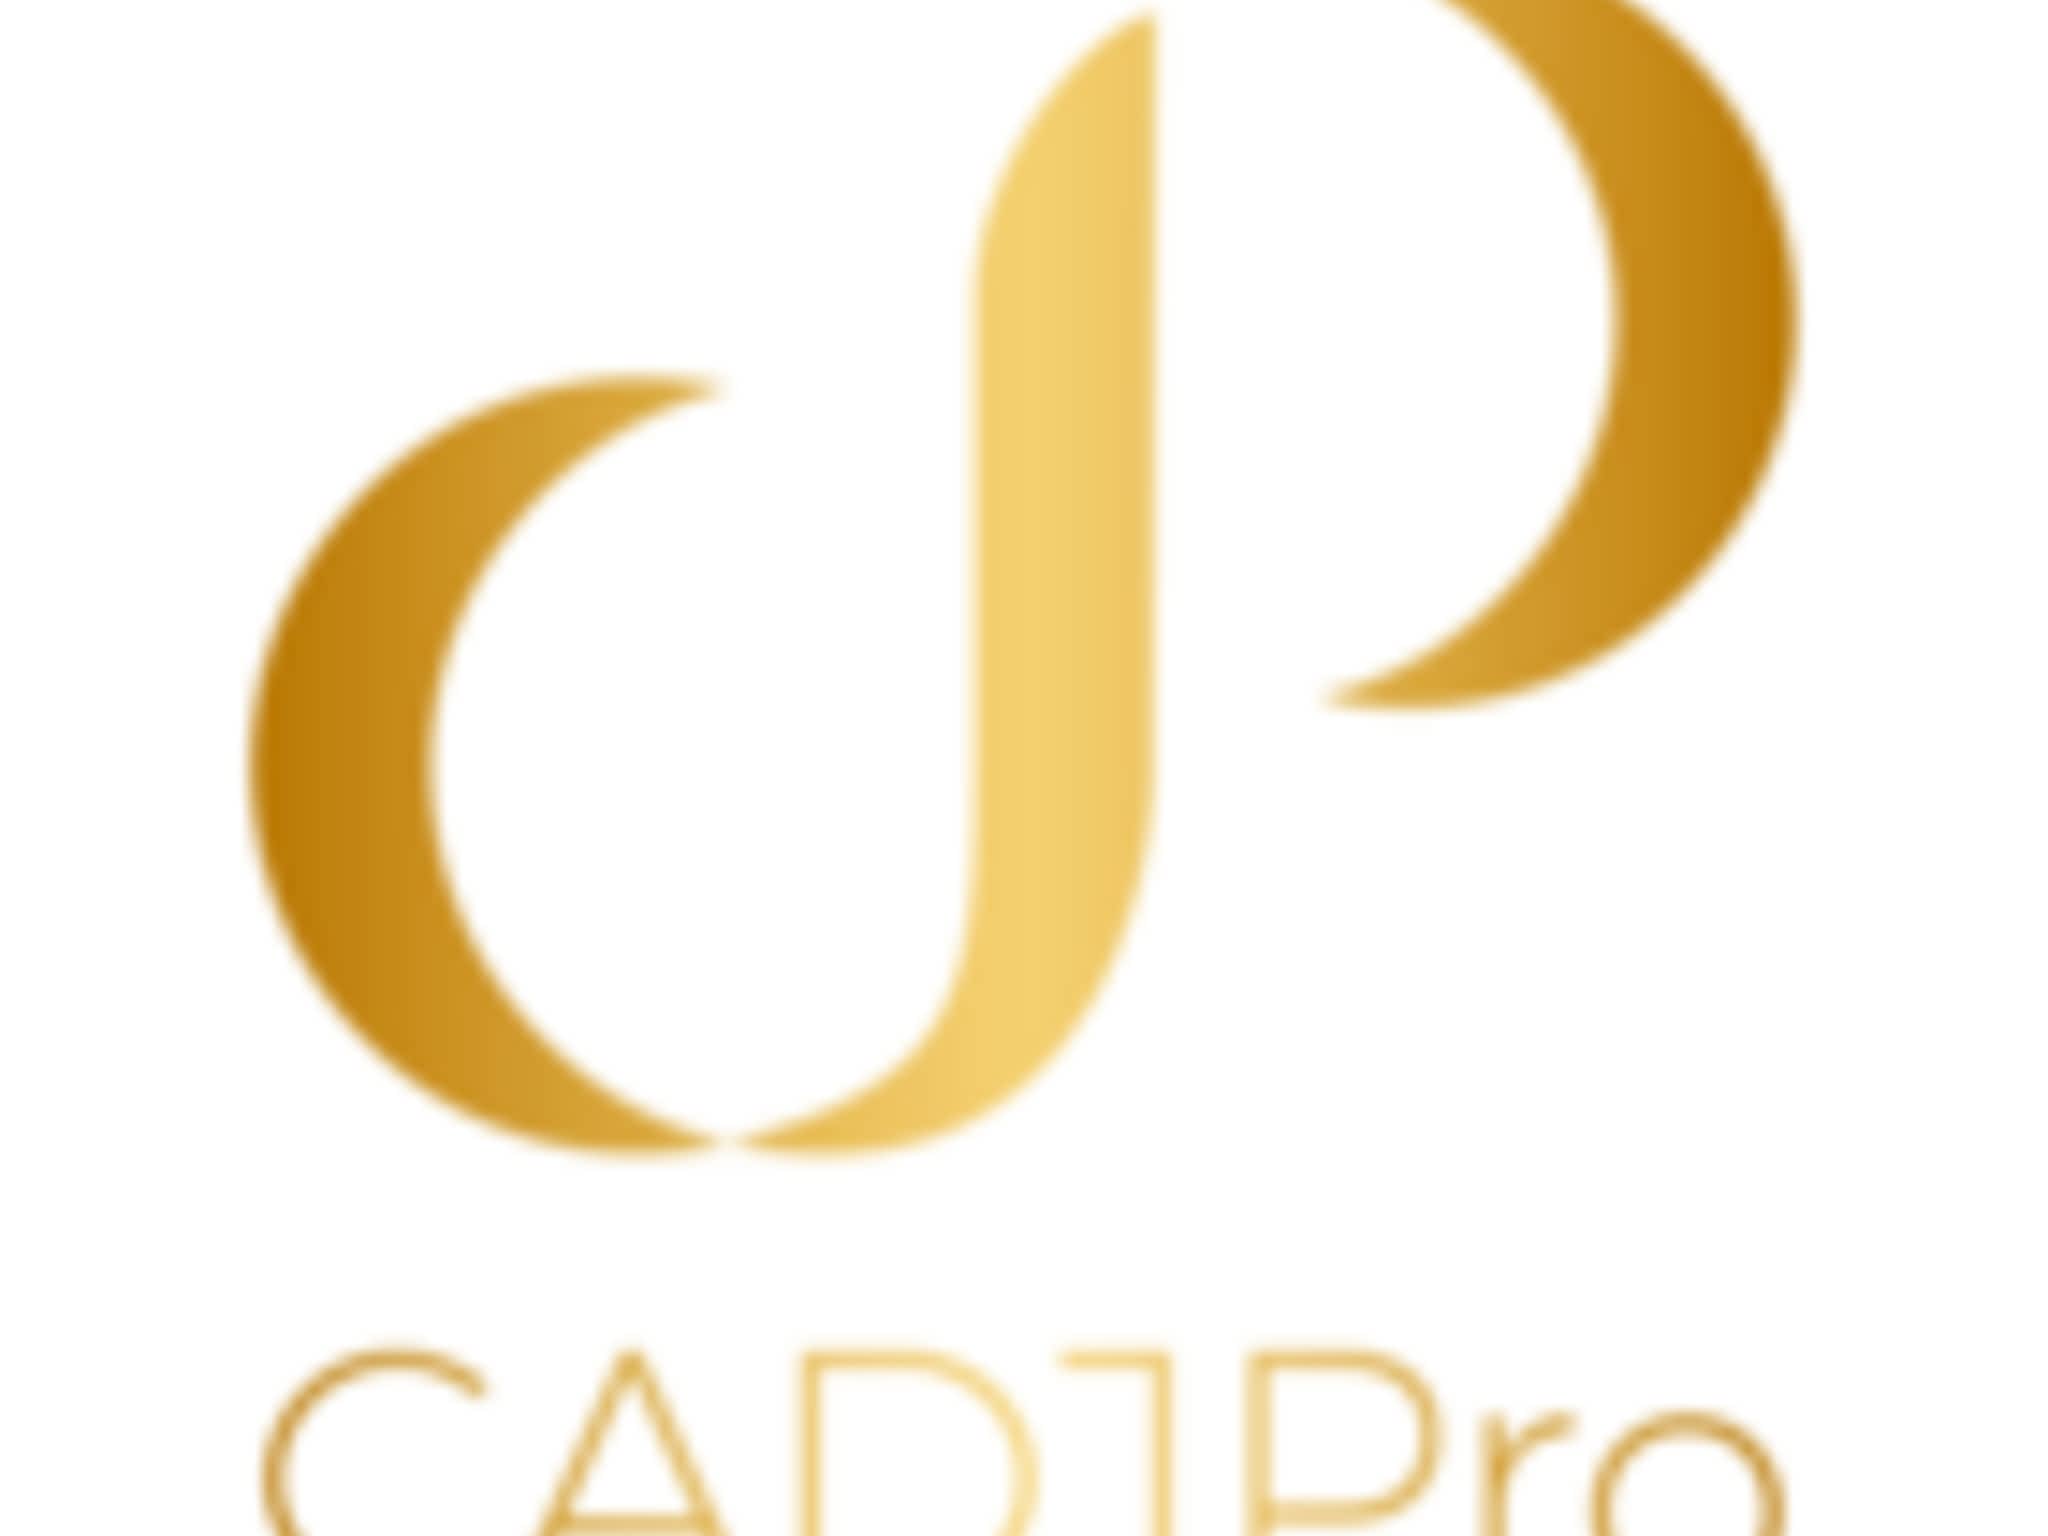 photo CADJPro Payroll Solutions